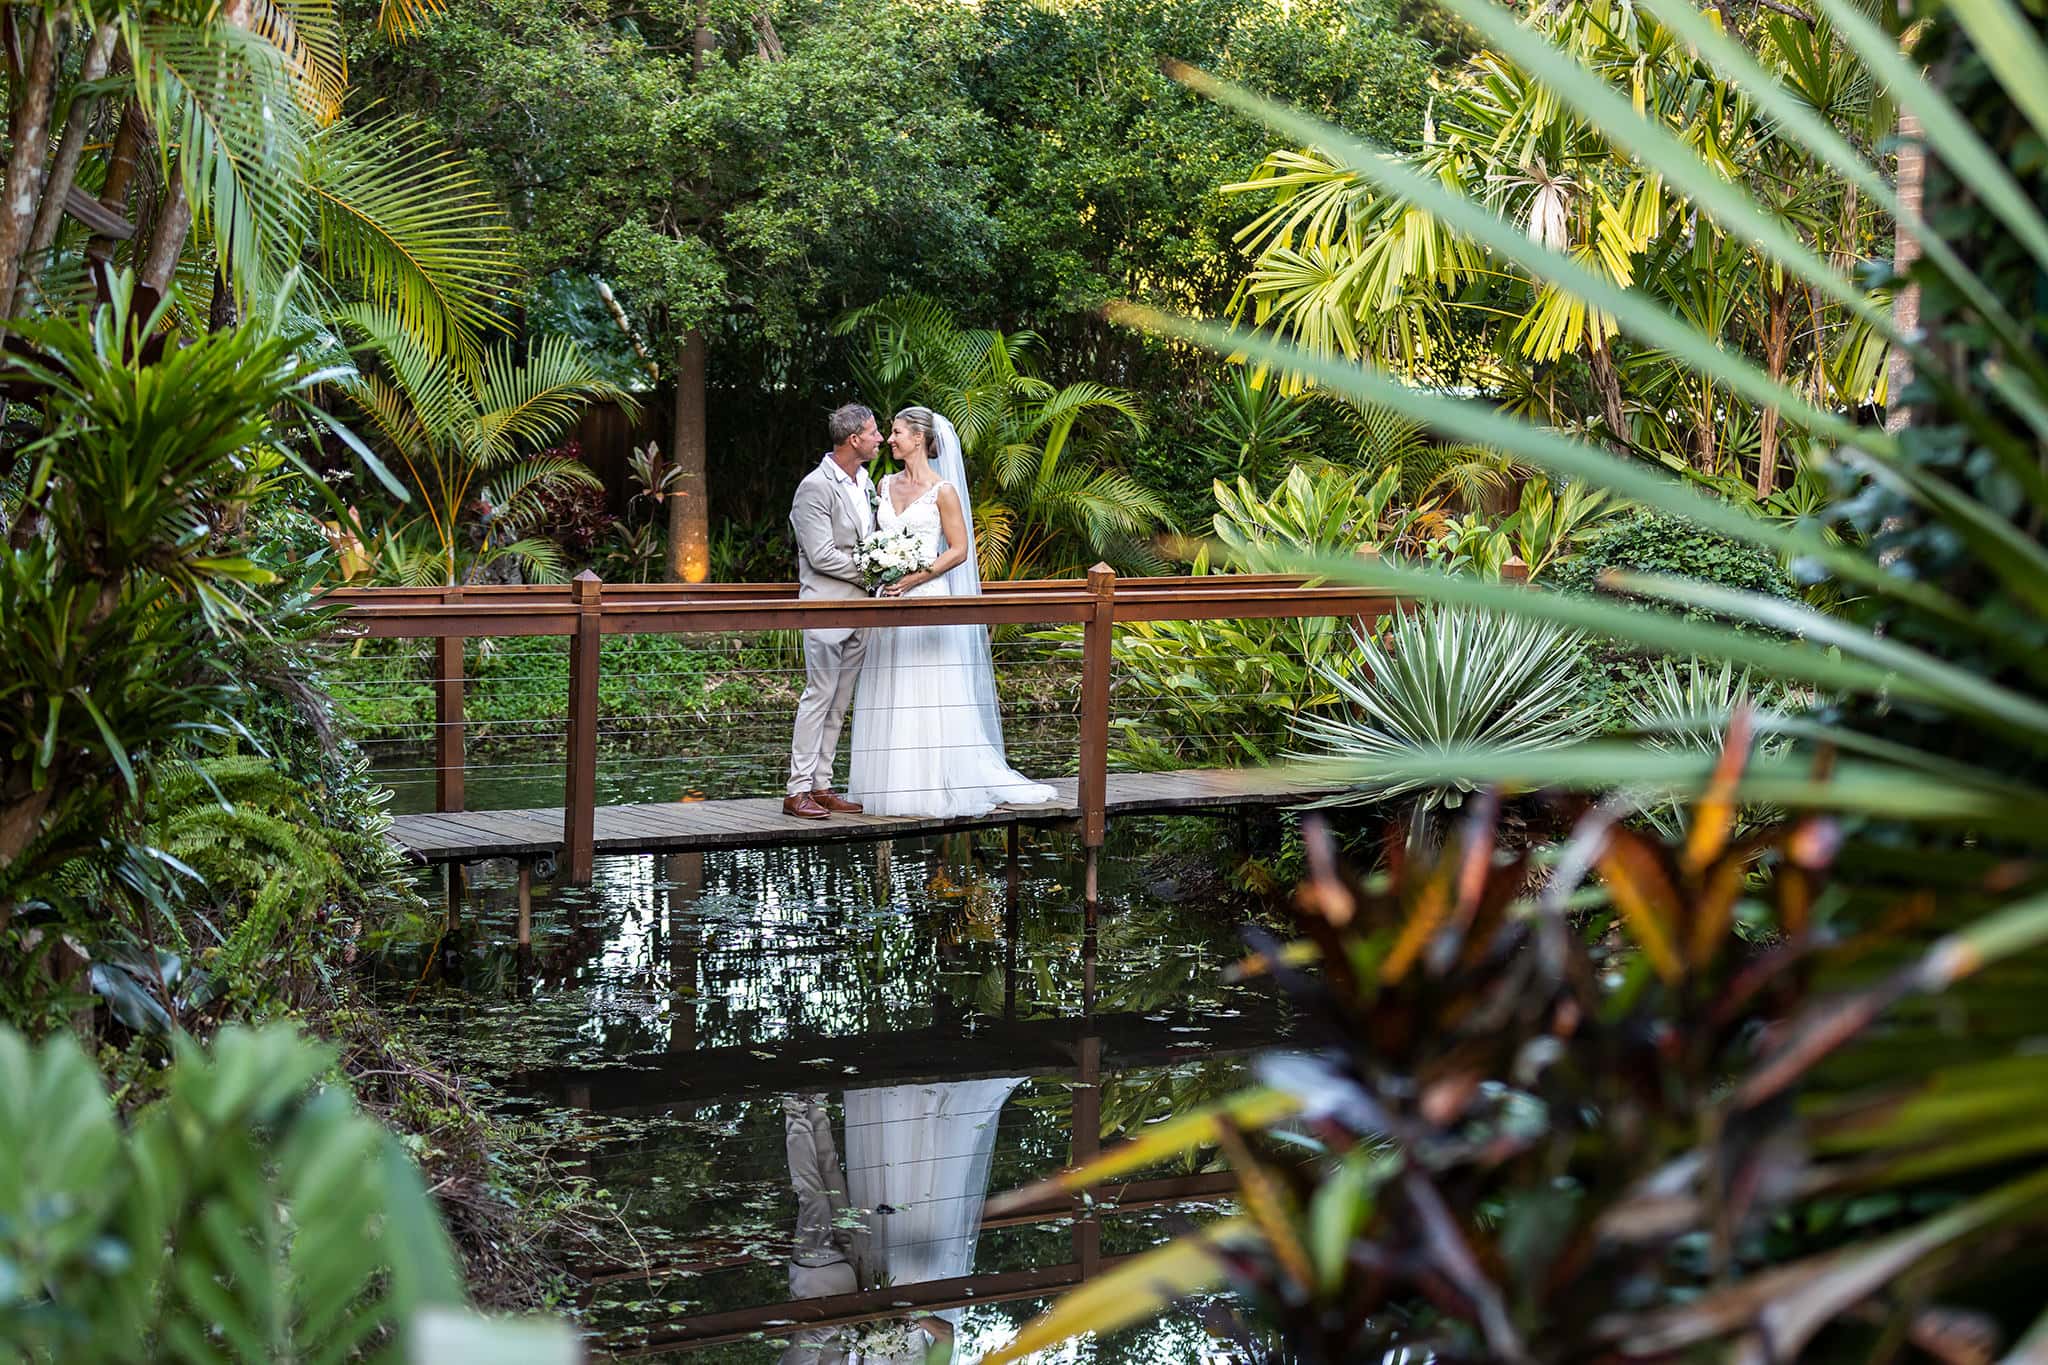 Sol Gardens Currumbin Valley wedding couples bridal photos by Mooi Photography.